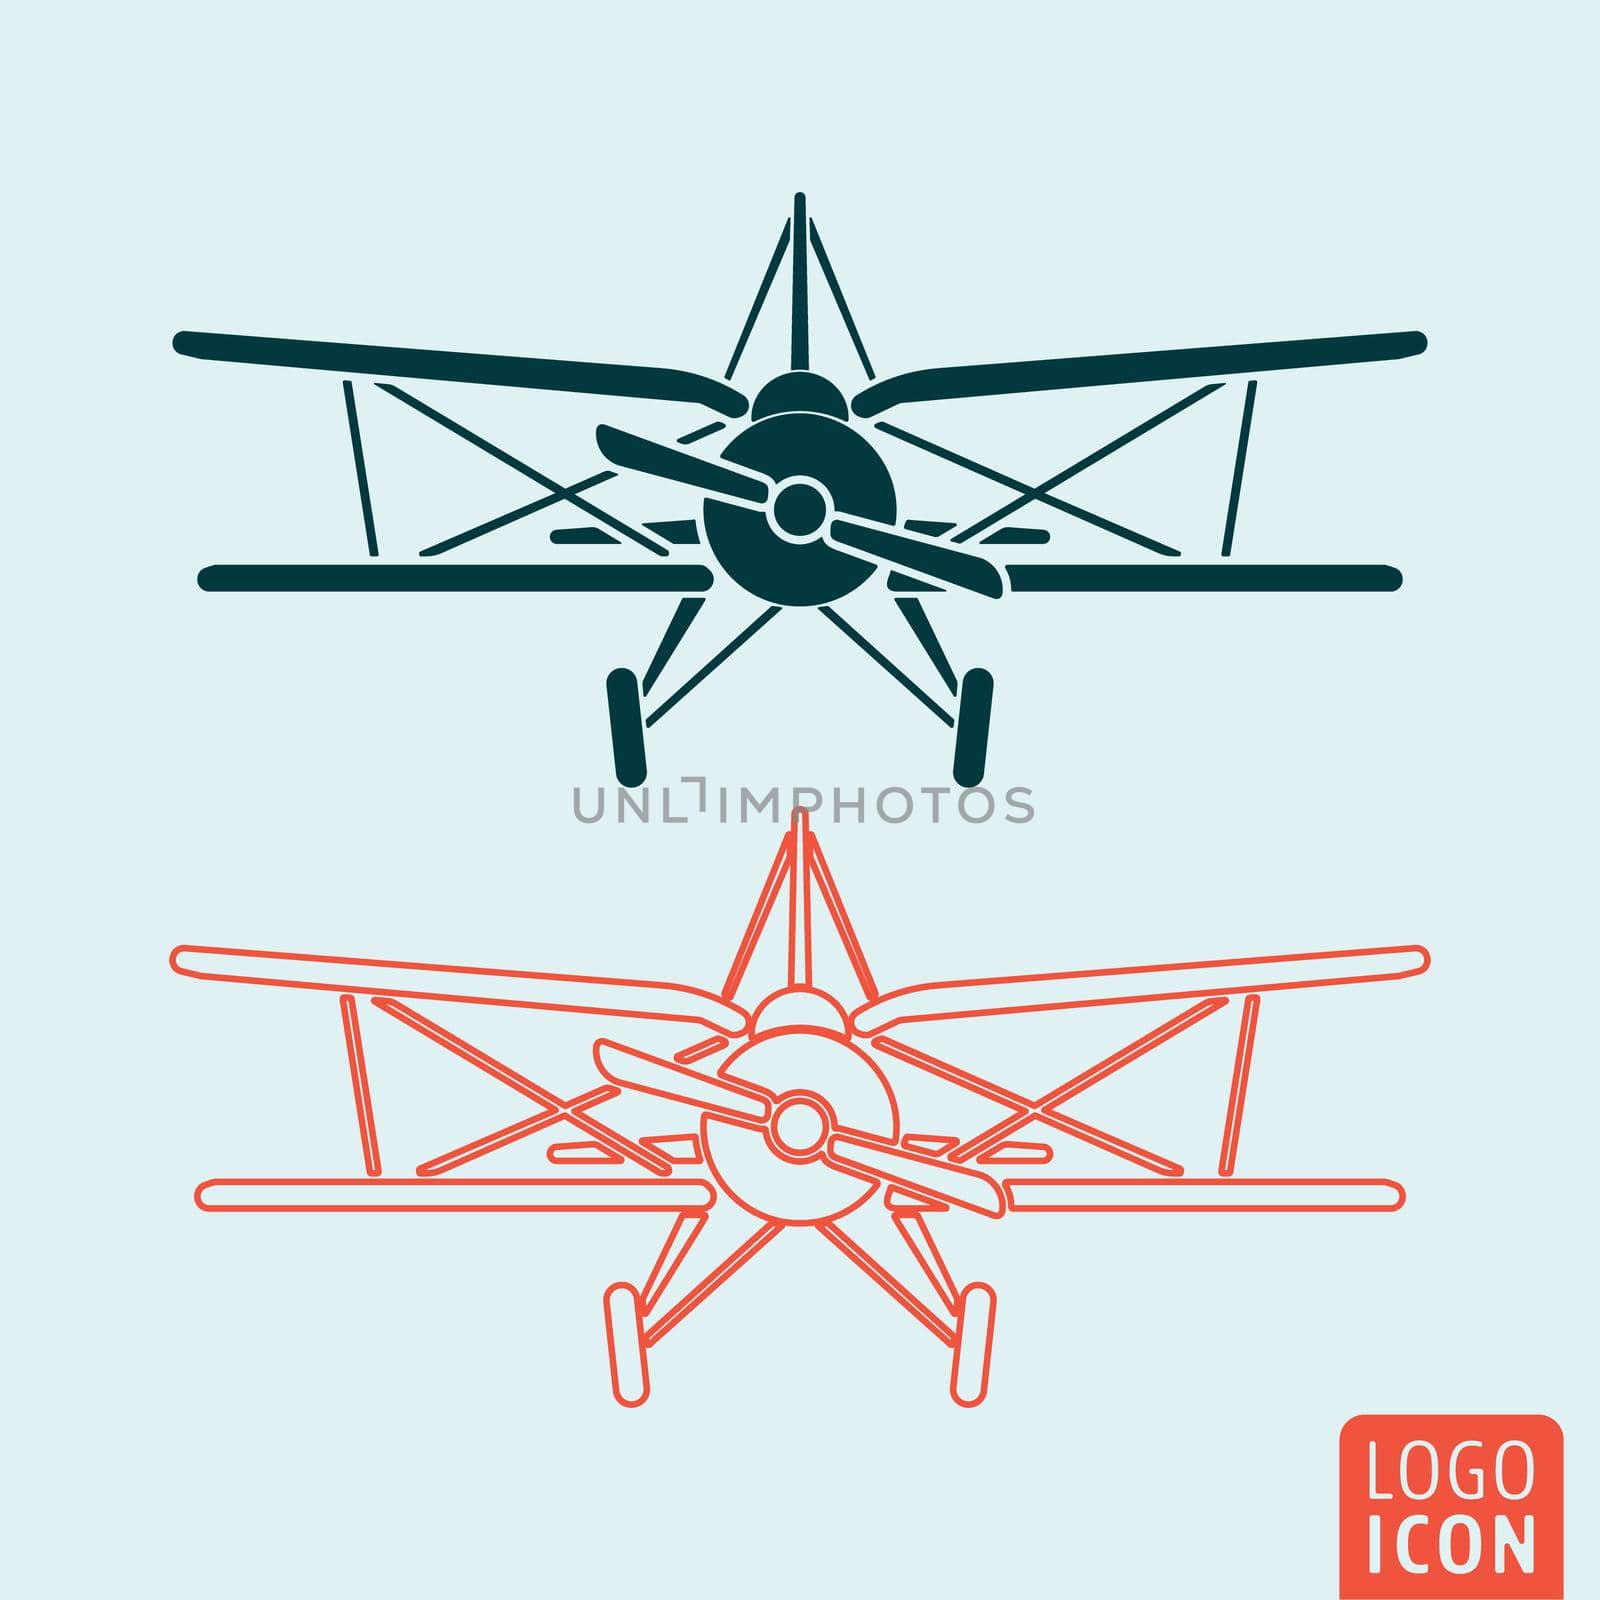 Old airplane icon. Retro biplane symbol. Vector illustration